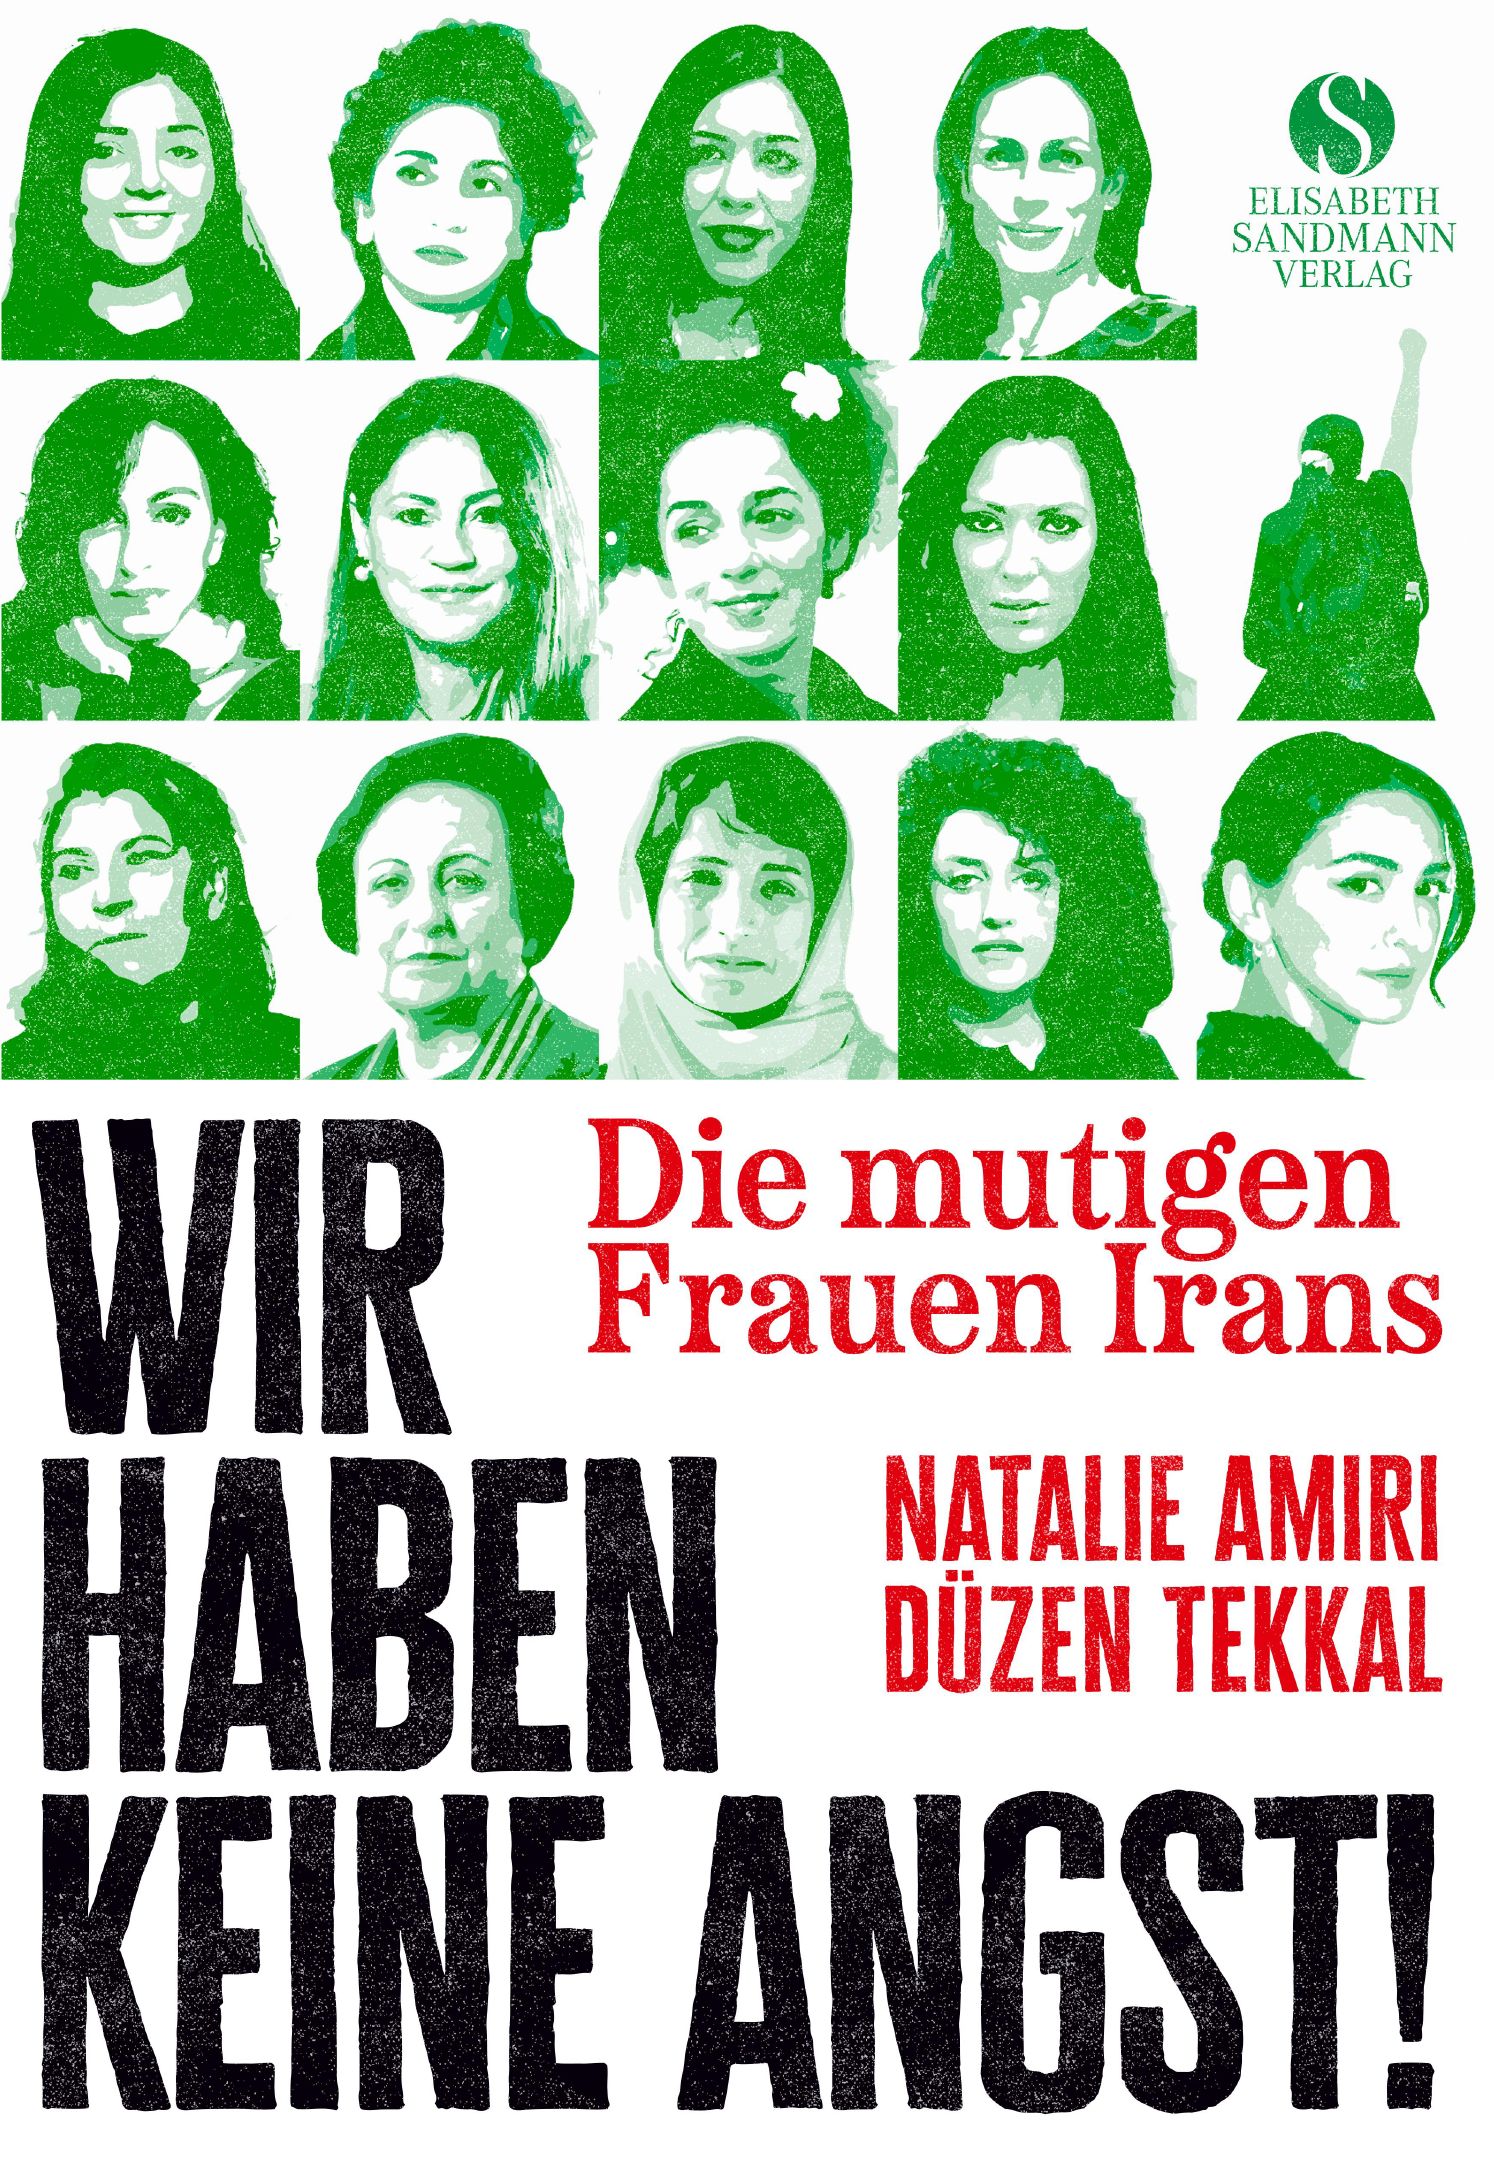 Cover of Amiri and Tekkal's "Wir haben keine Angst! Die mutigen Frauen Irans" (Eng.: 'We're not afraid! The brave women of Iran'), published in German by E. Sandmann (source: publisher)